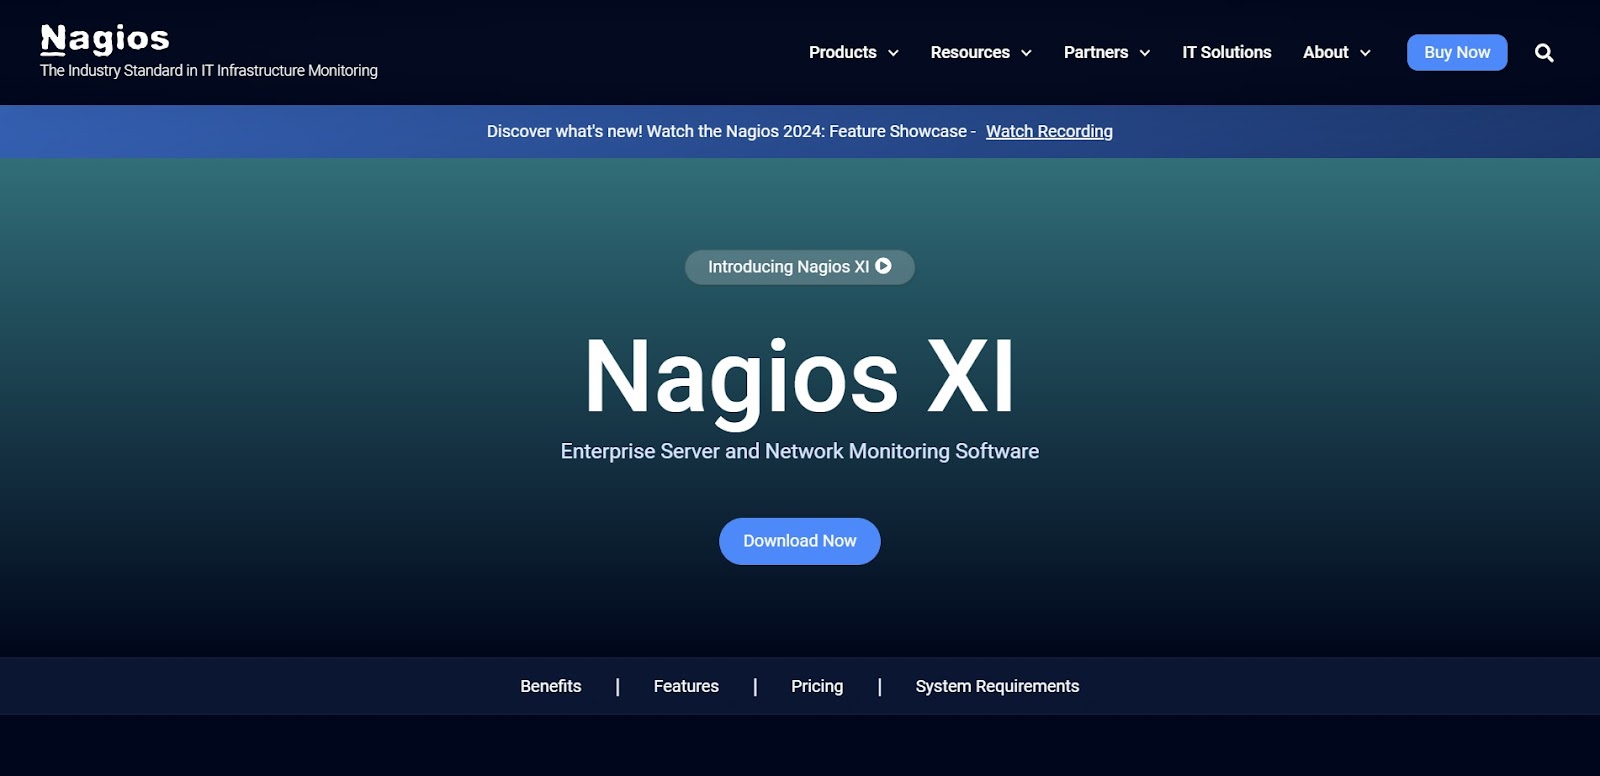 A screenshot of Nagios' website